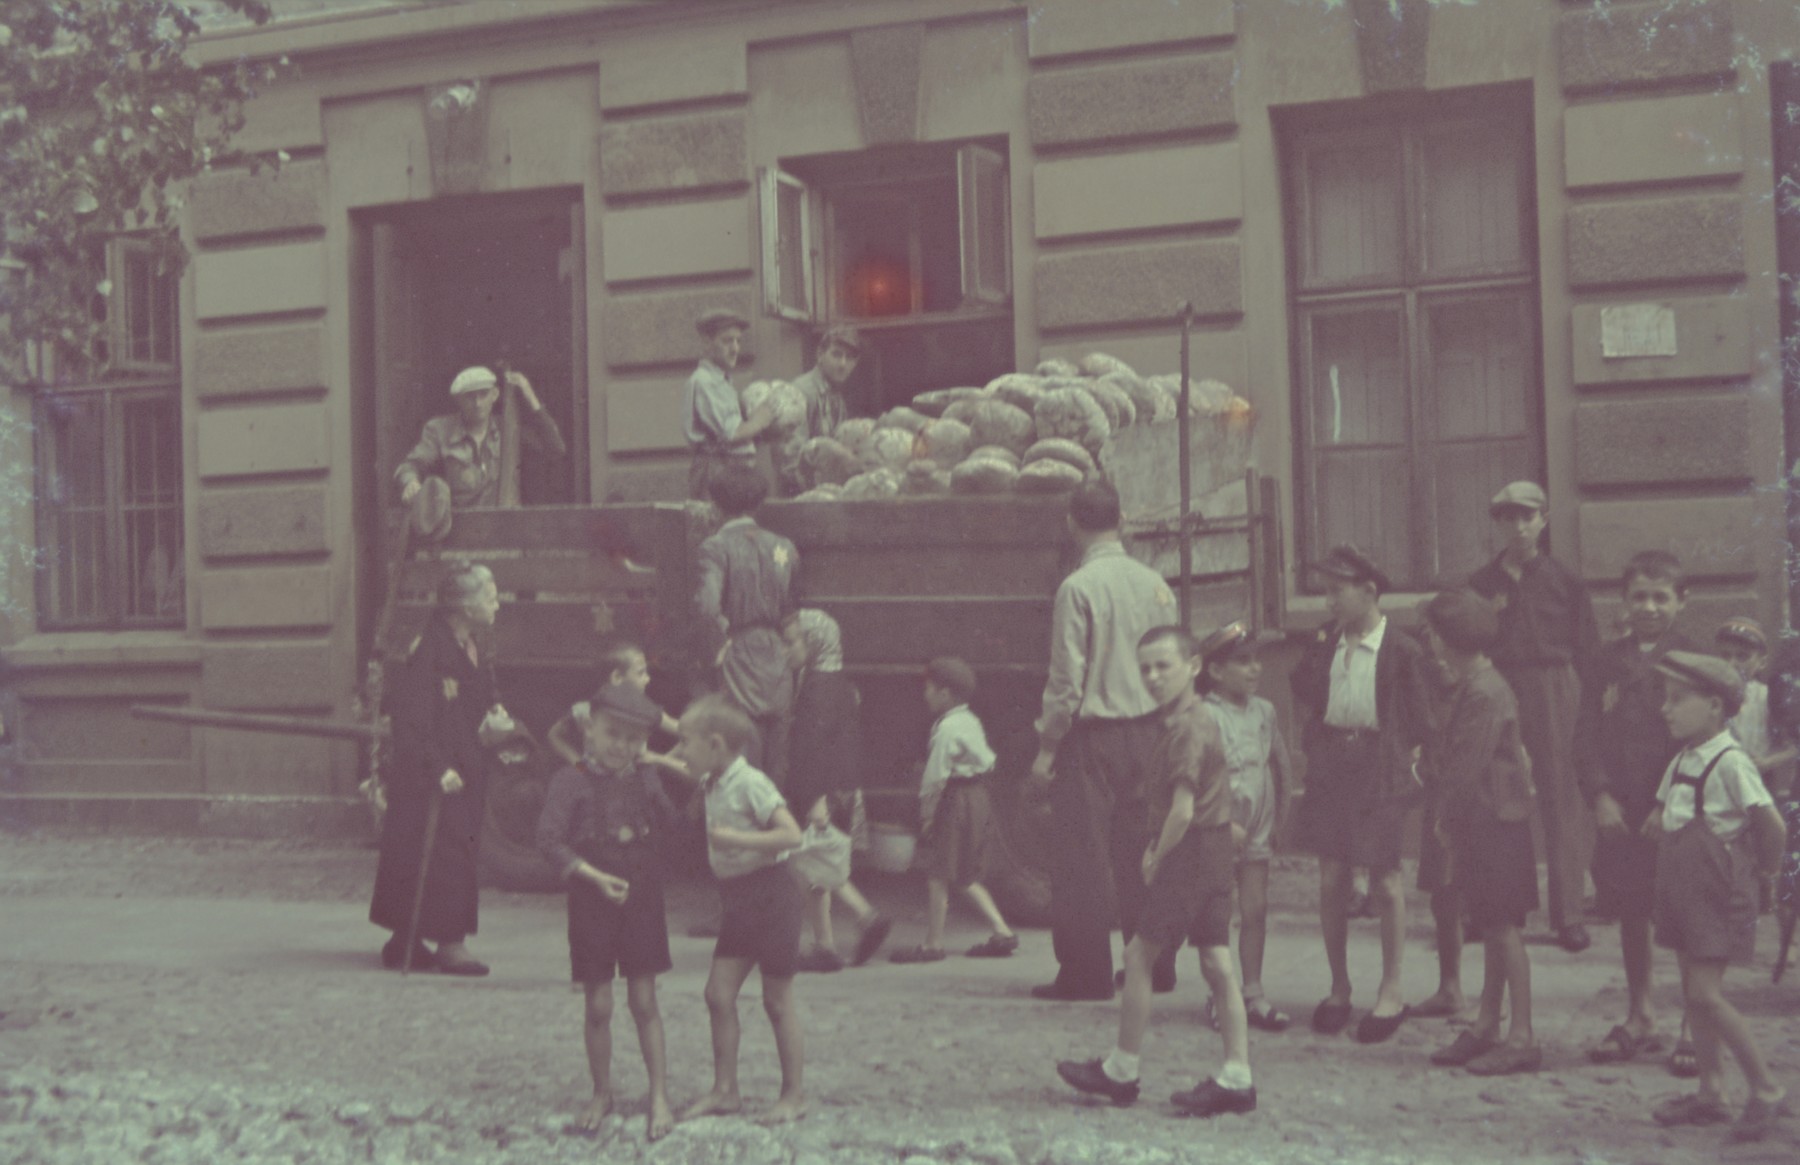 Children wait outside the bread distribution center in the Lodz ghetto.

Original German caption: "Strassenbild" (street scene), #147.